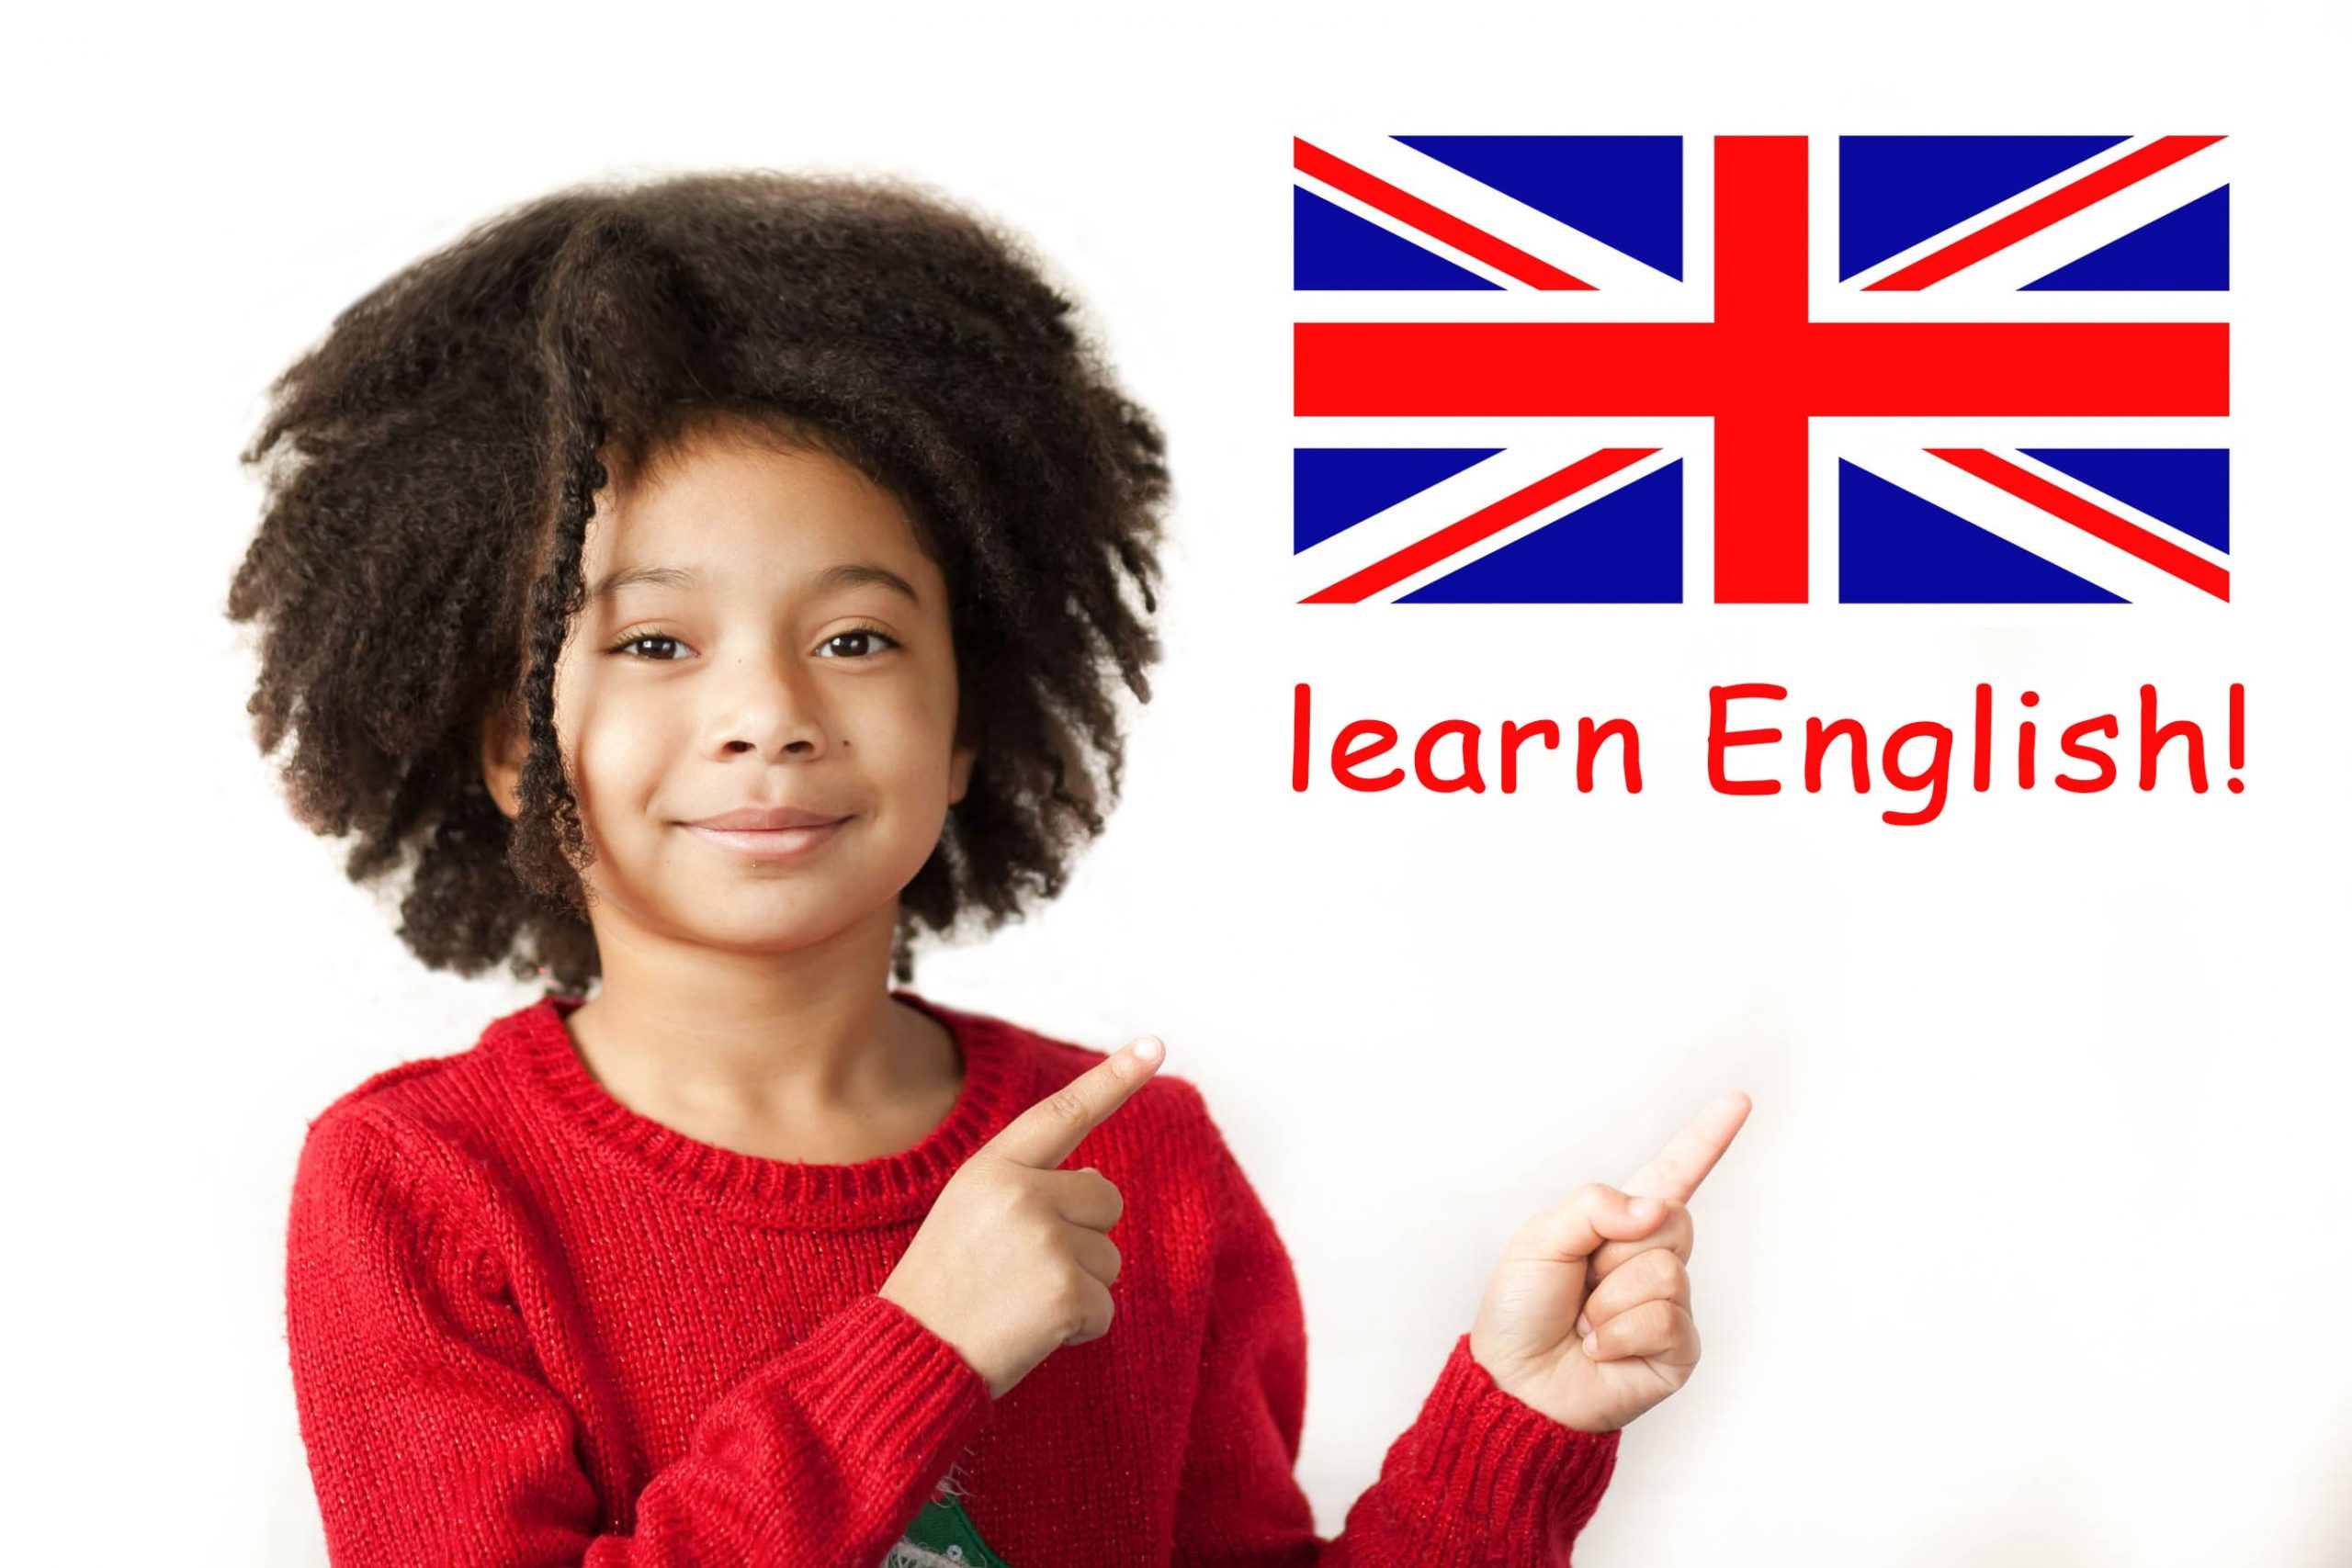 English for Children